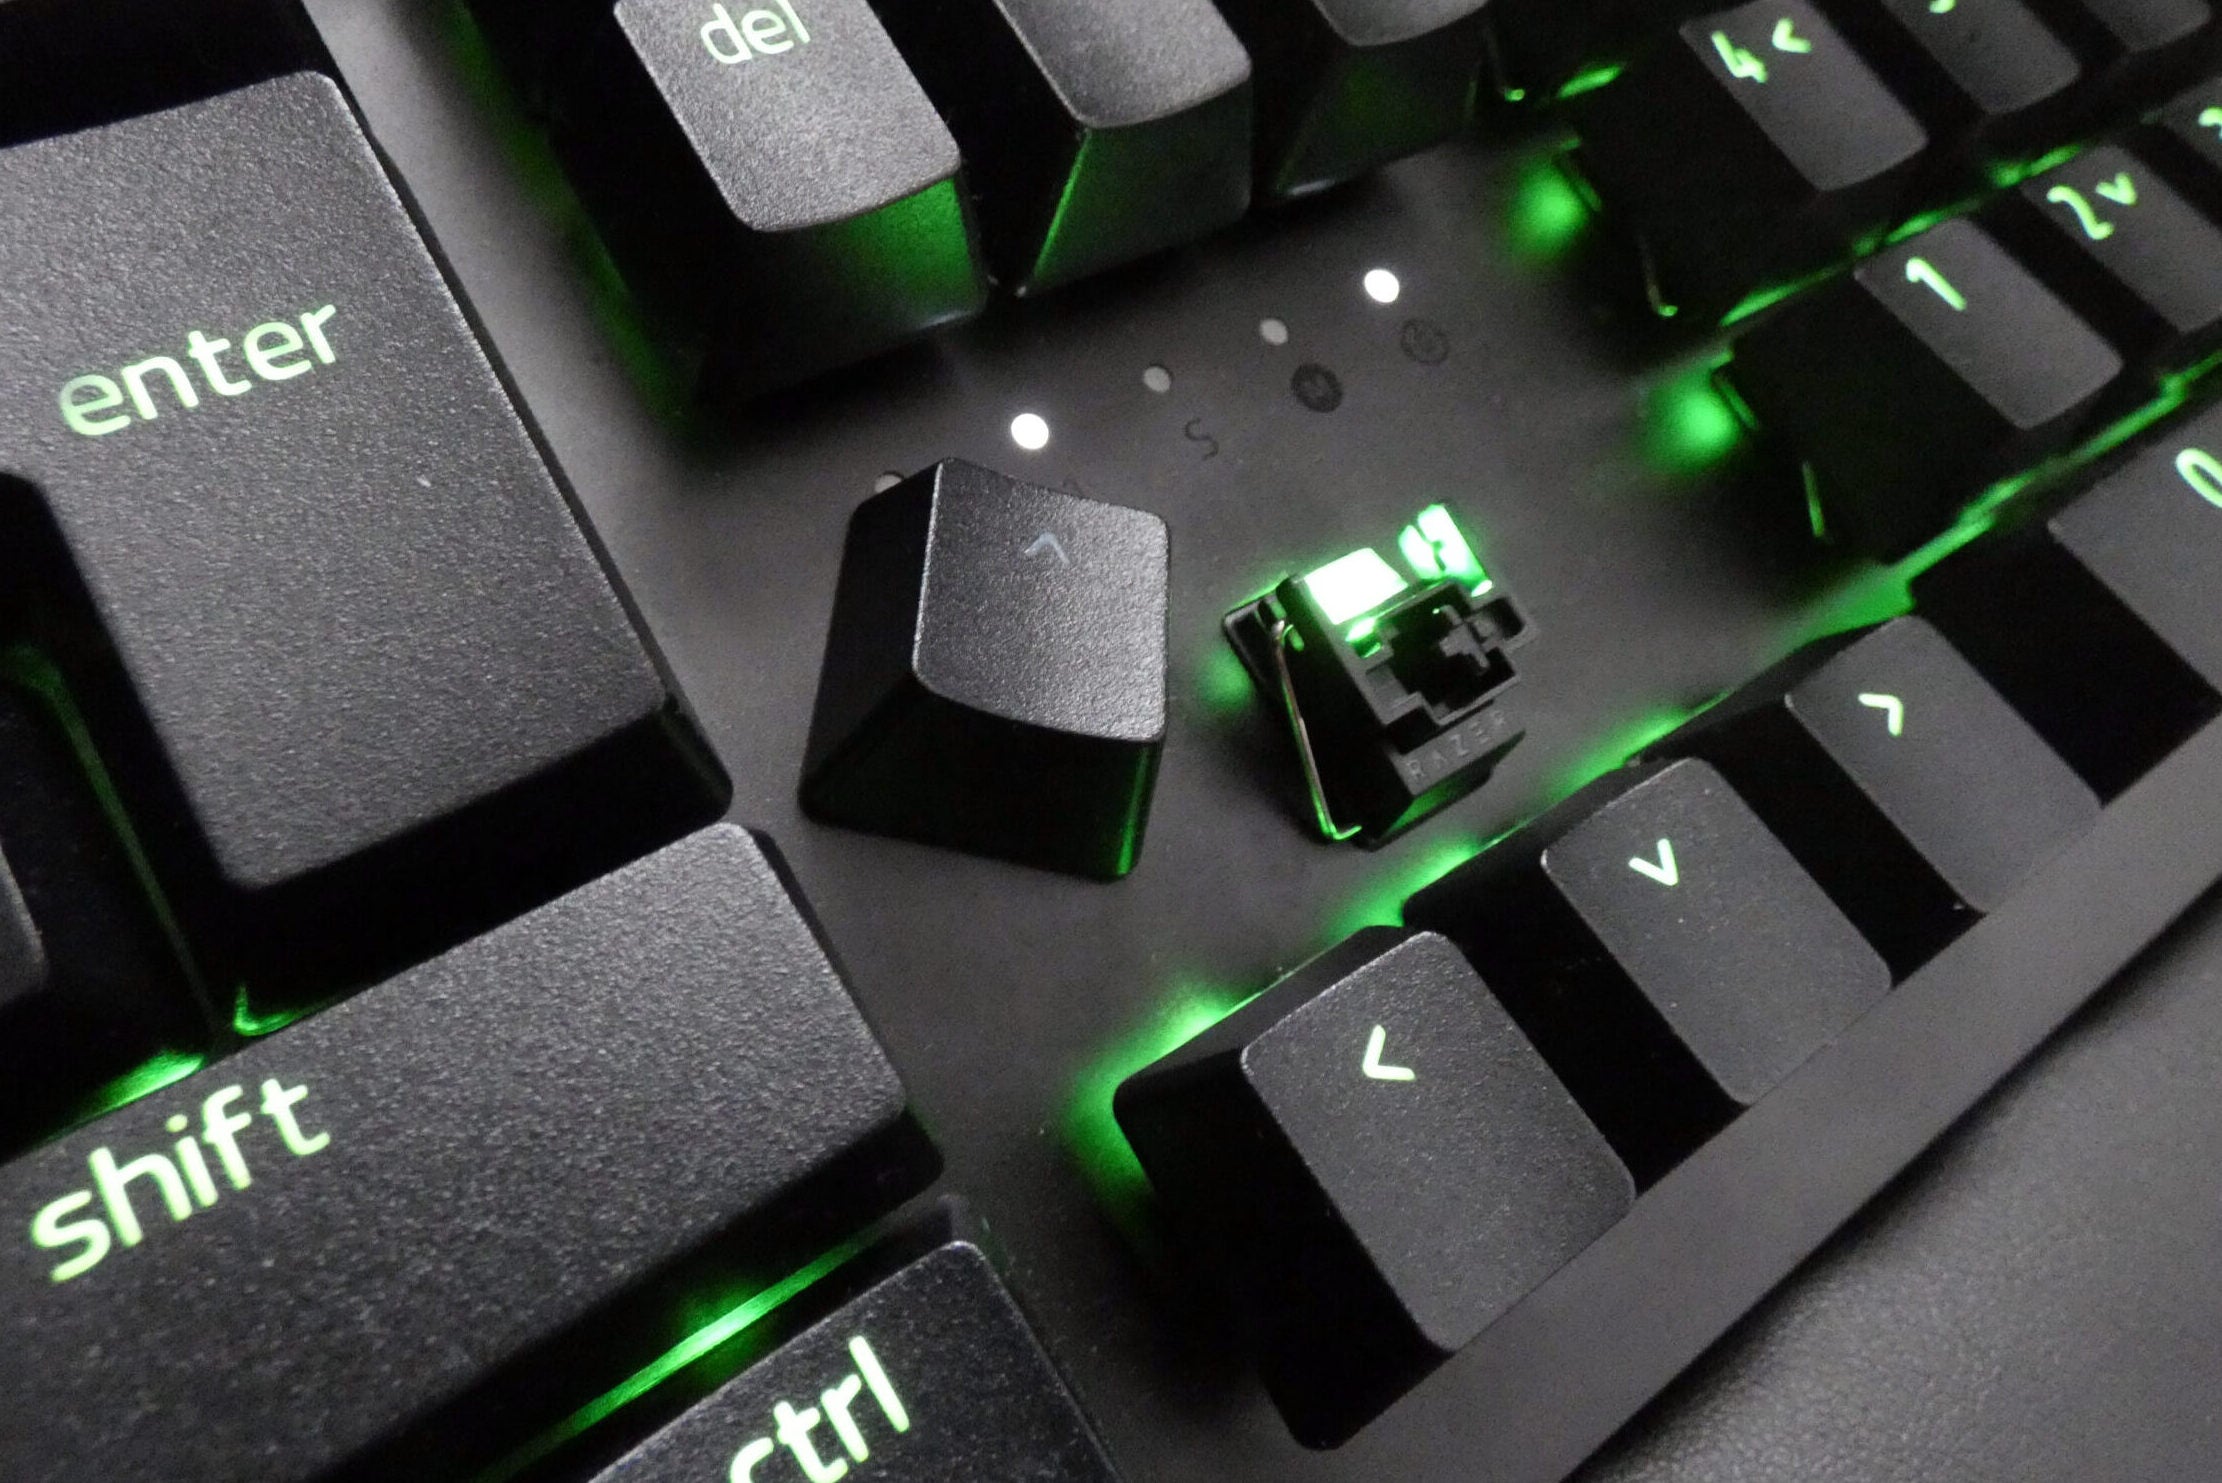 Razer Huntsman V2 AnalogClose up image of a removed key from a black Huntsman V2 analog keyboard with green lights beneath the keys